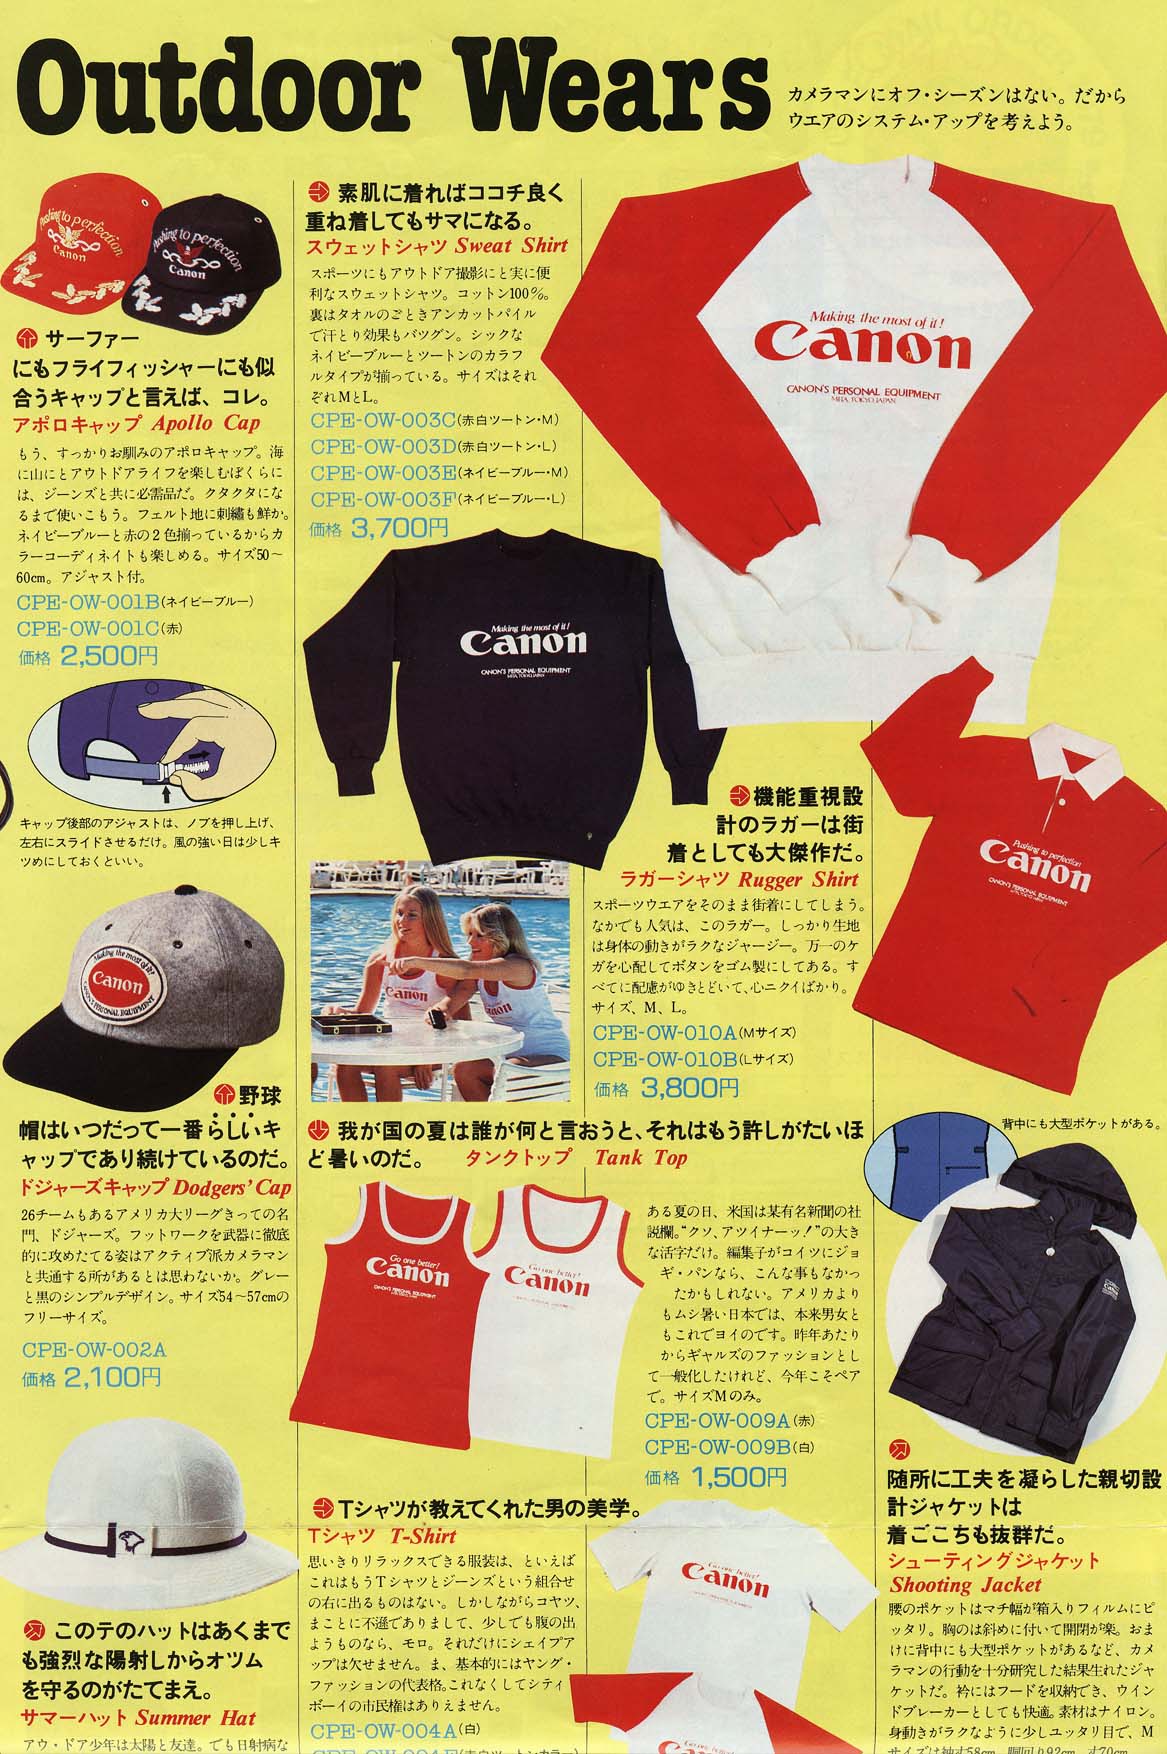 C.P.E. CATALOG 1979, 1979-1980, 1980』 | hiroyaikedaの物欲の館2